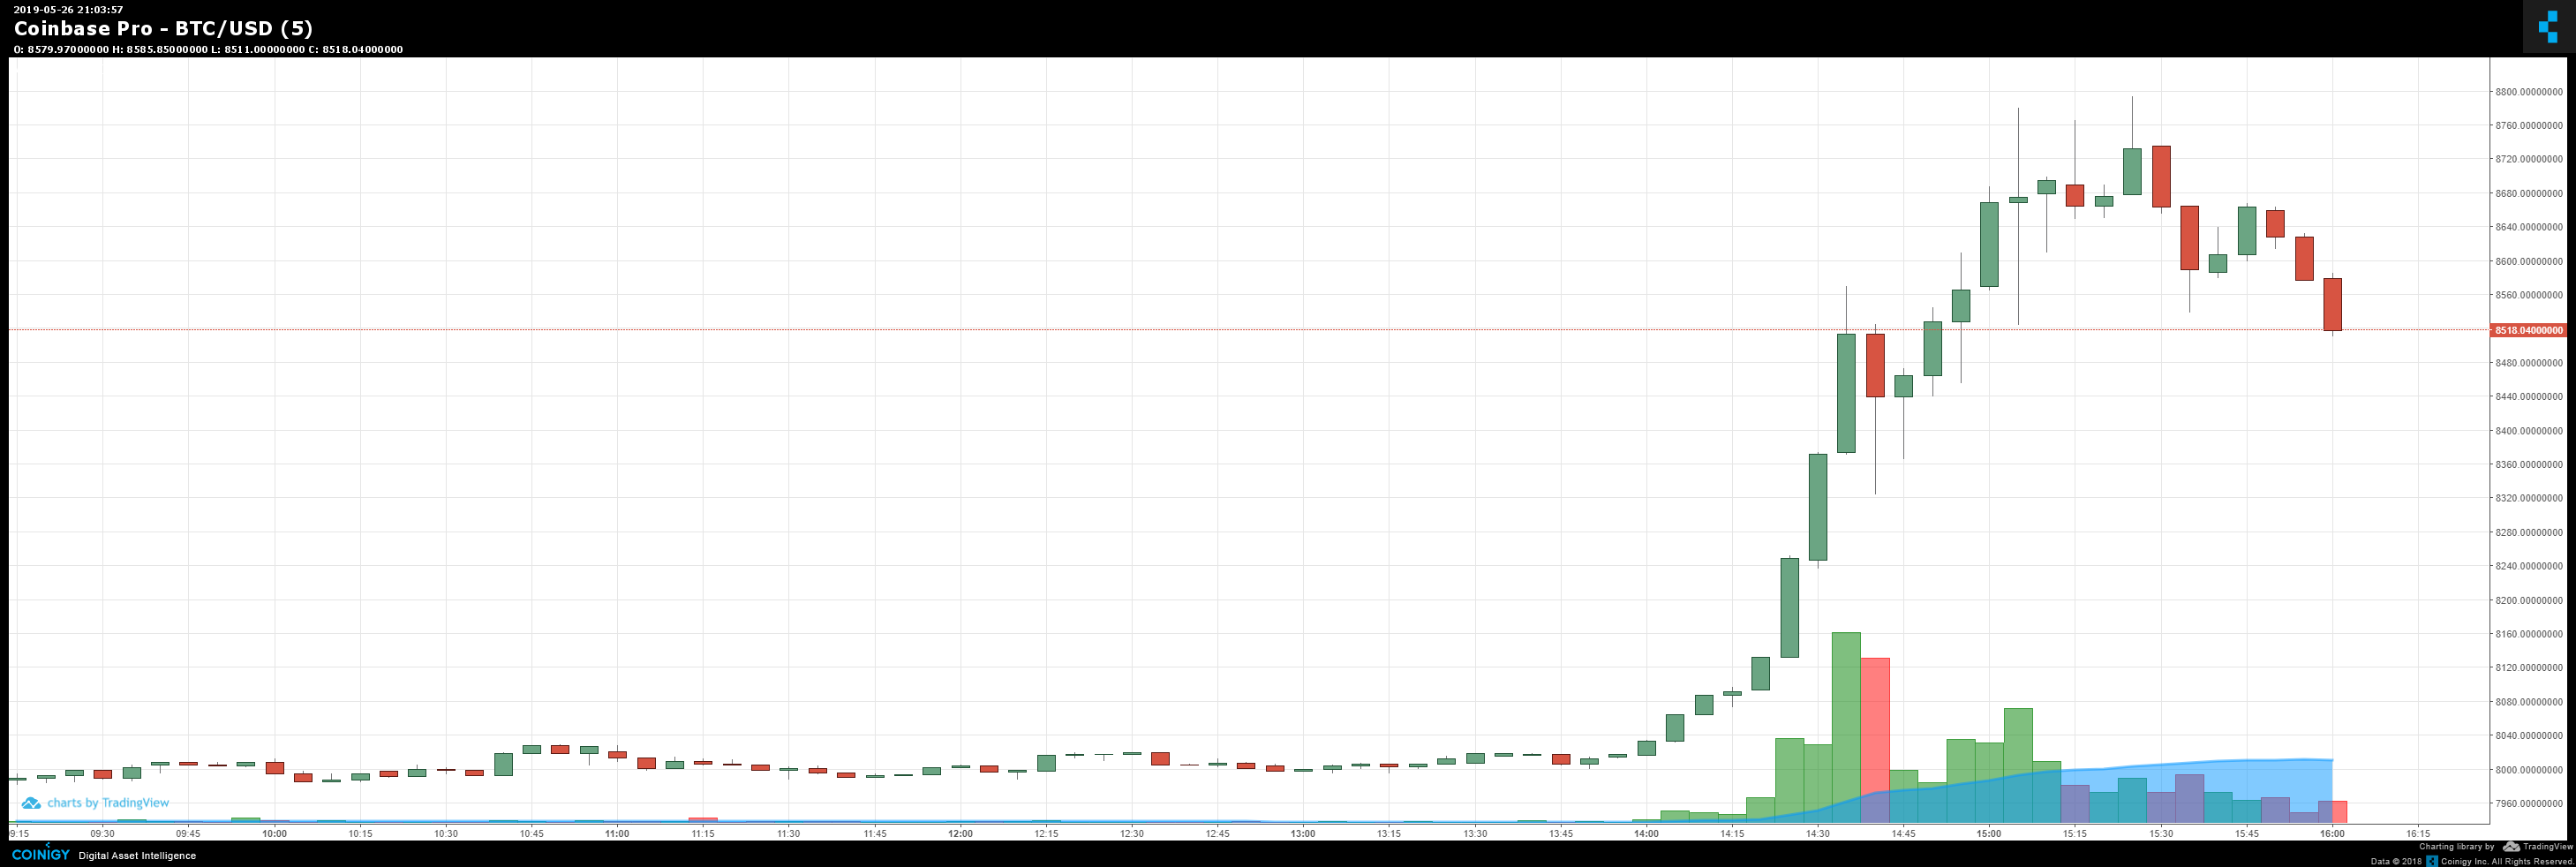 Bitcoin Price on Coinbase Pro GDAX at 10pm UTC